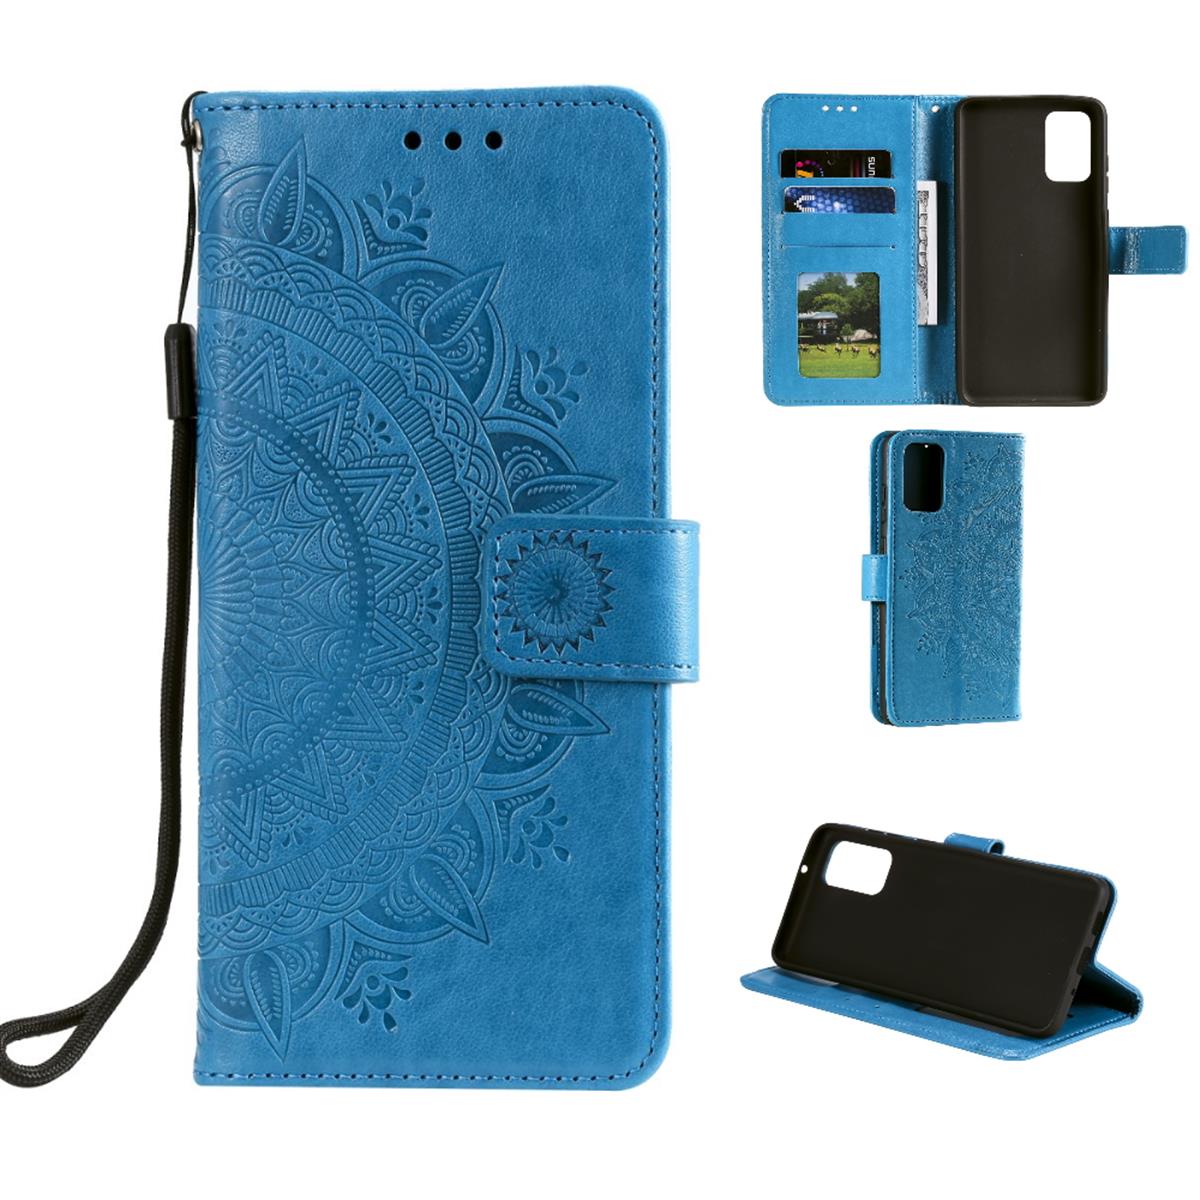 Hülle für Samsung Galaxy S20 Plus Handyhülle Flip Case Schutzhülle Mandala Blau